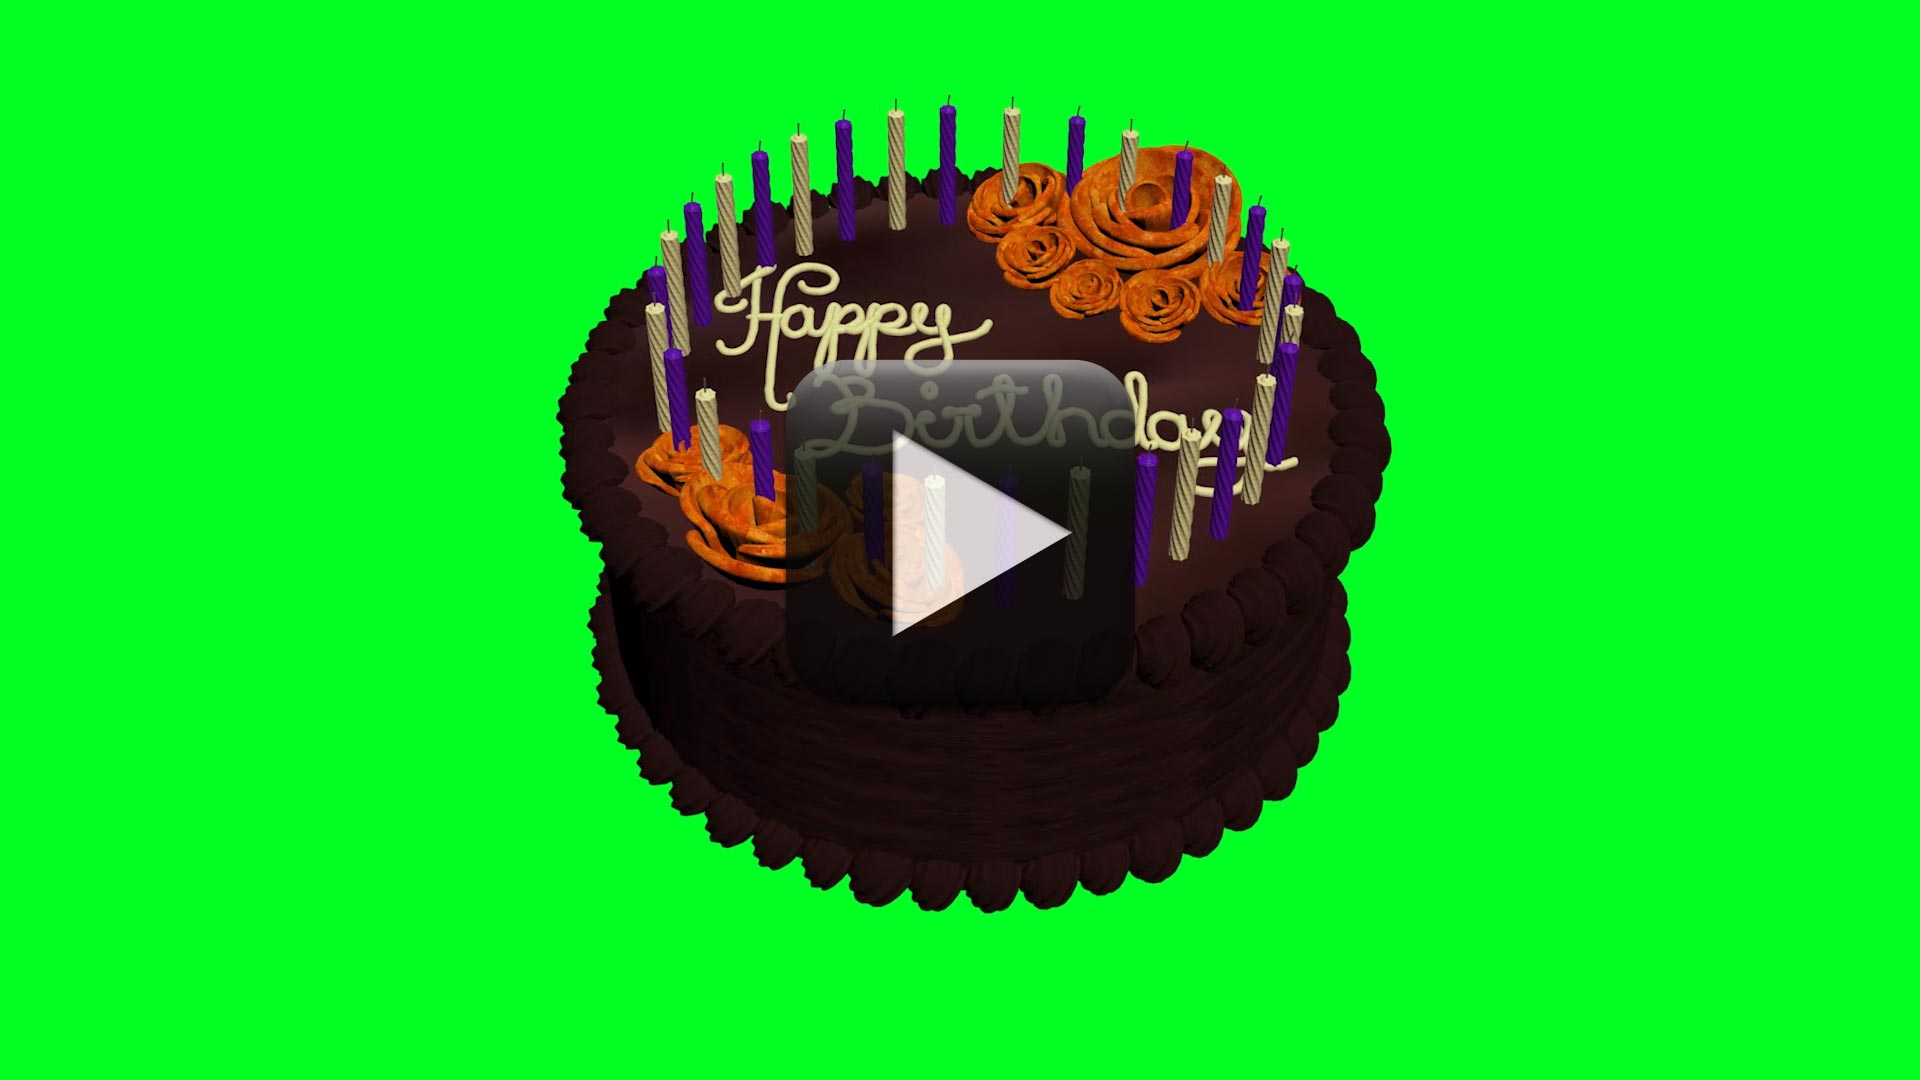 Green Screen Cake on Vimeo